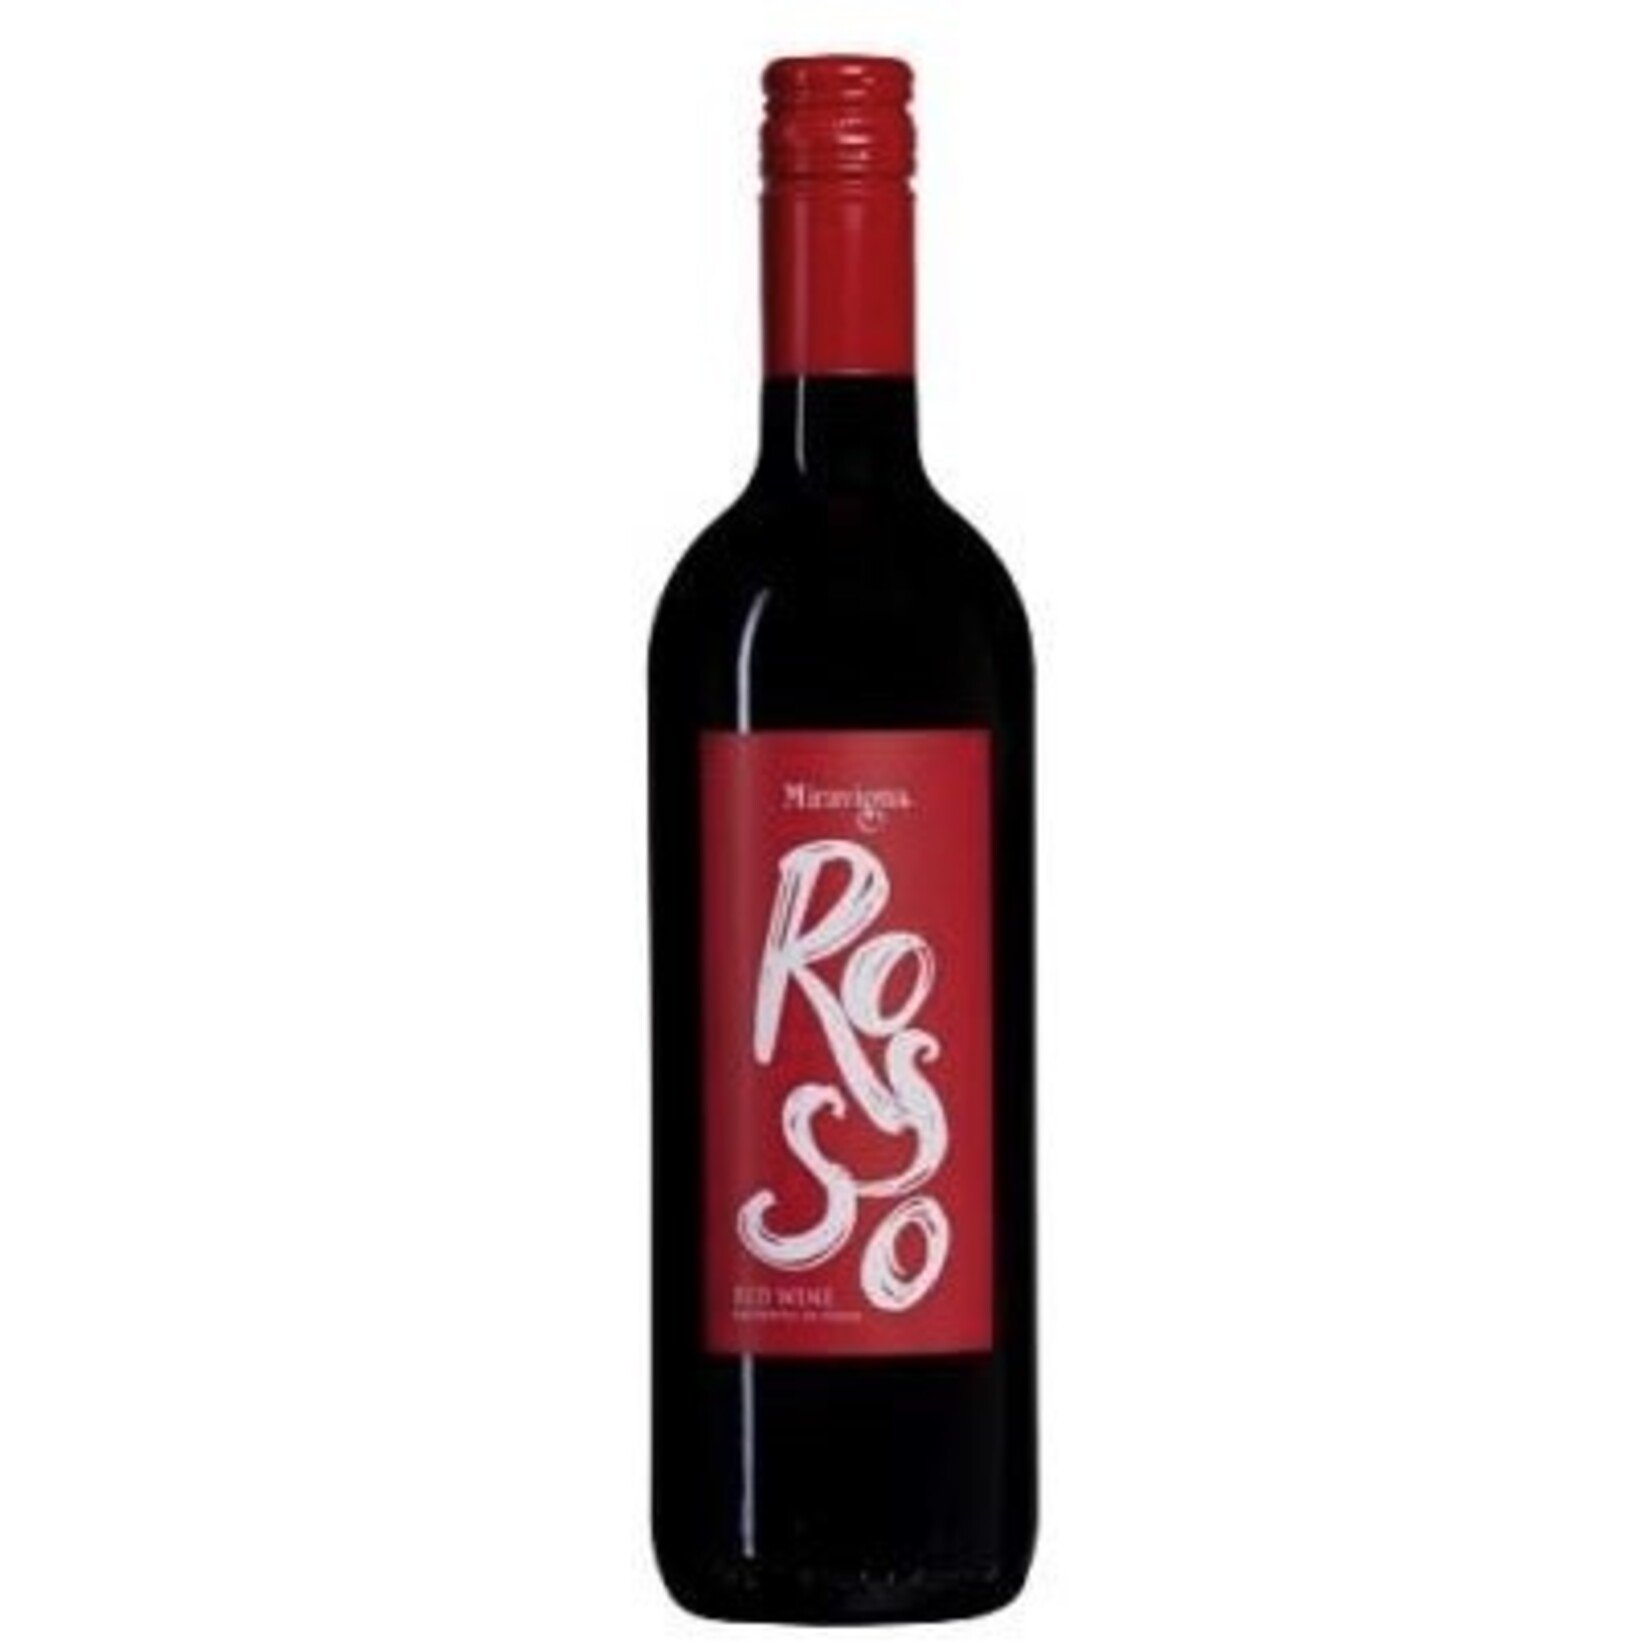 Wine Casal Thaulero Rosso Miravigna